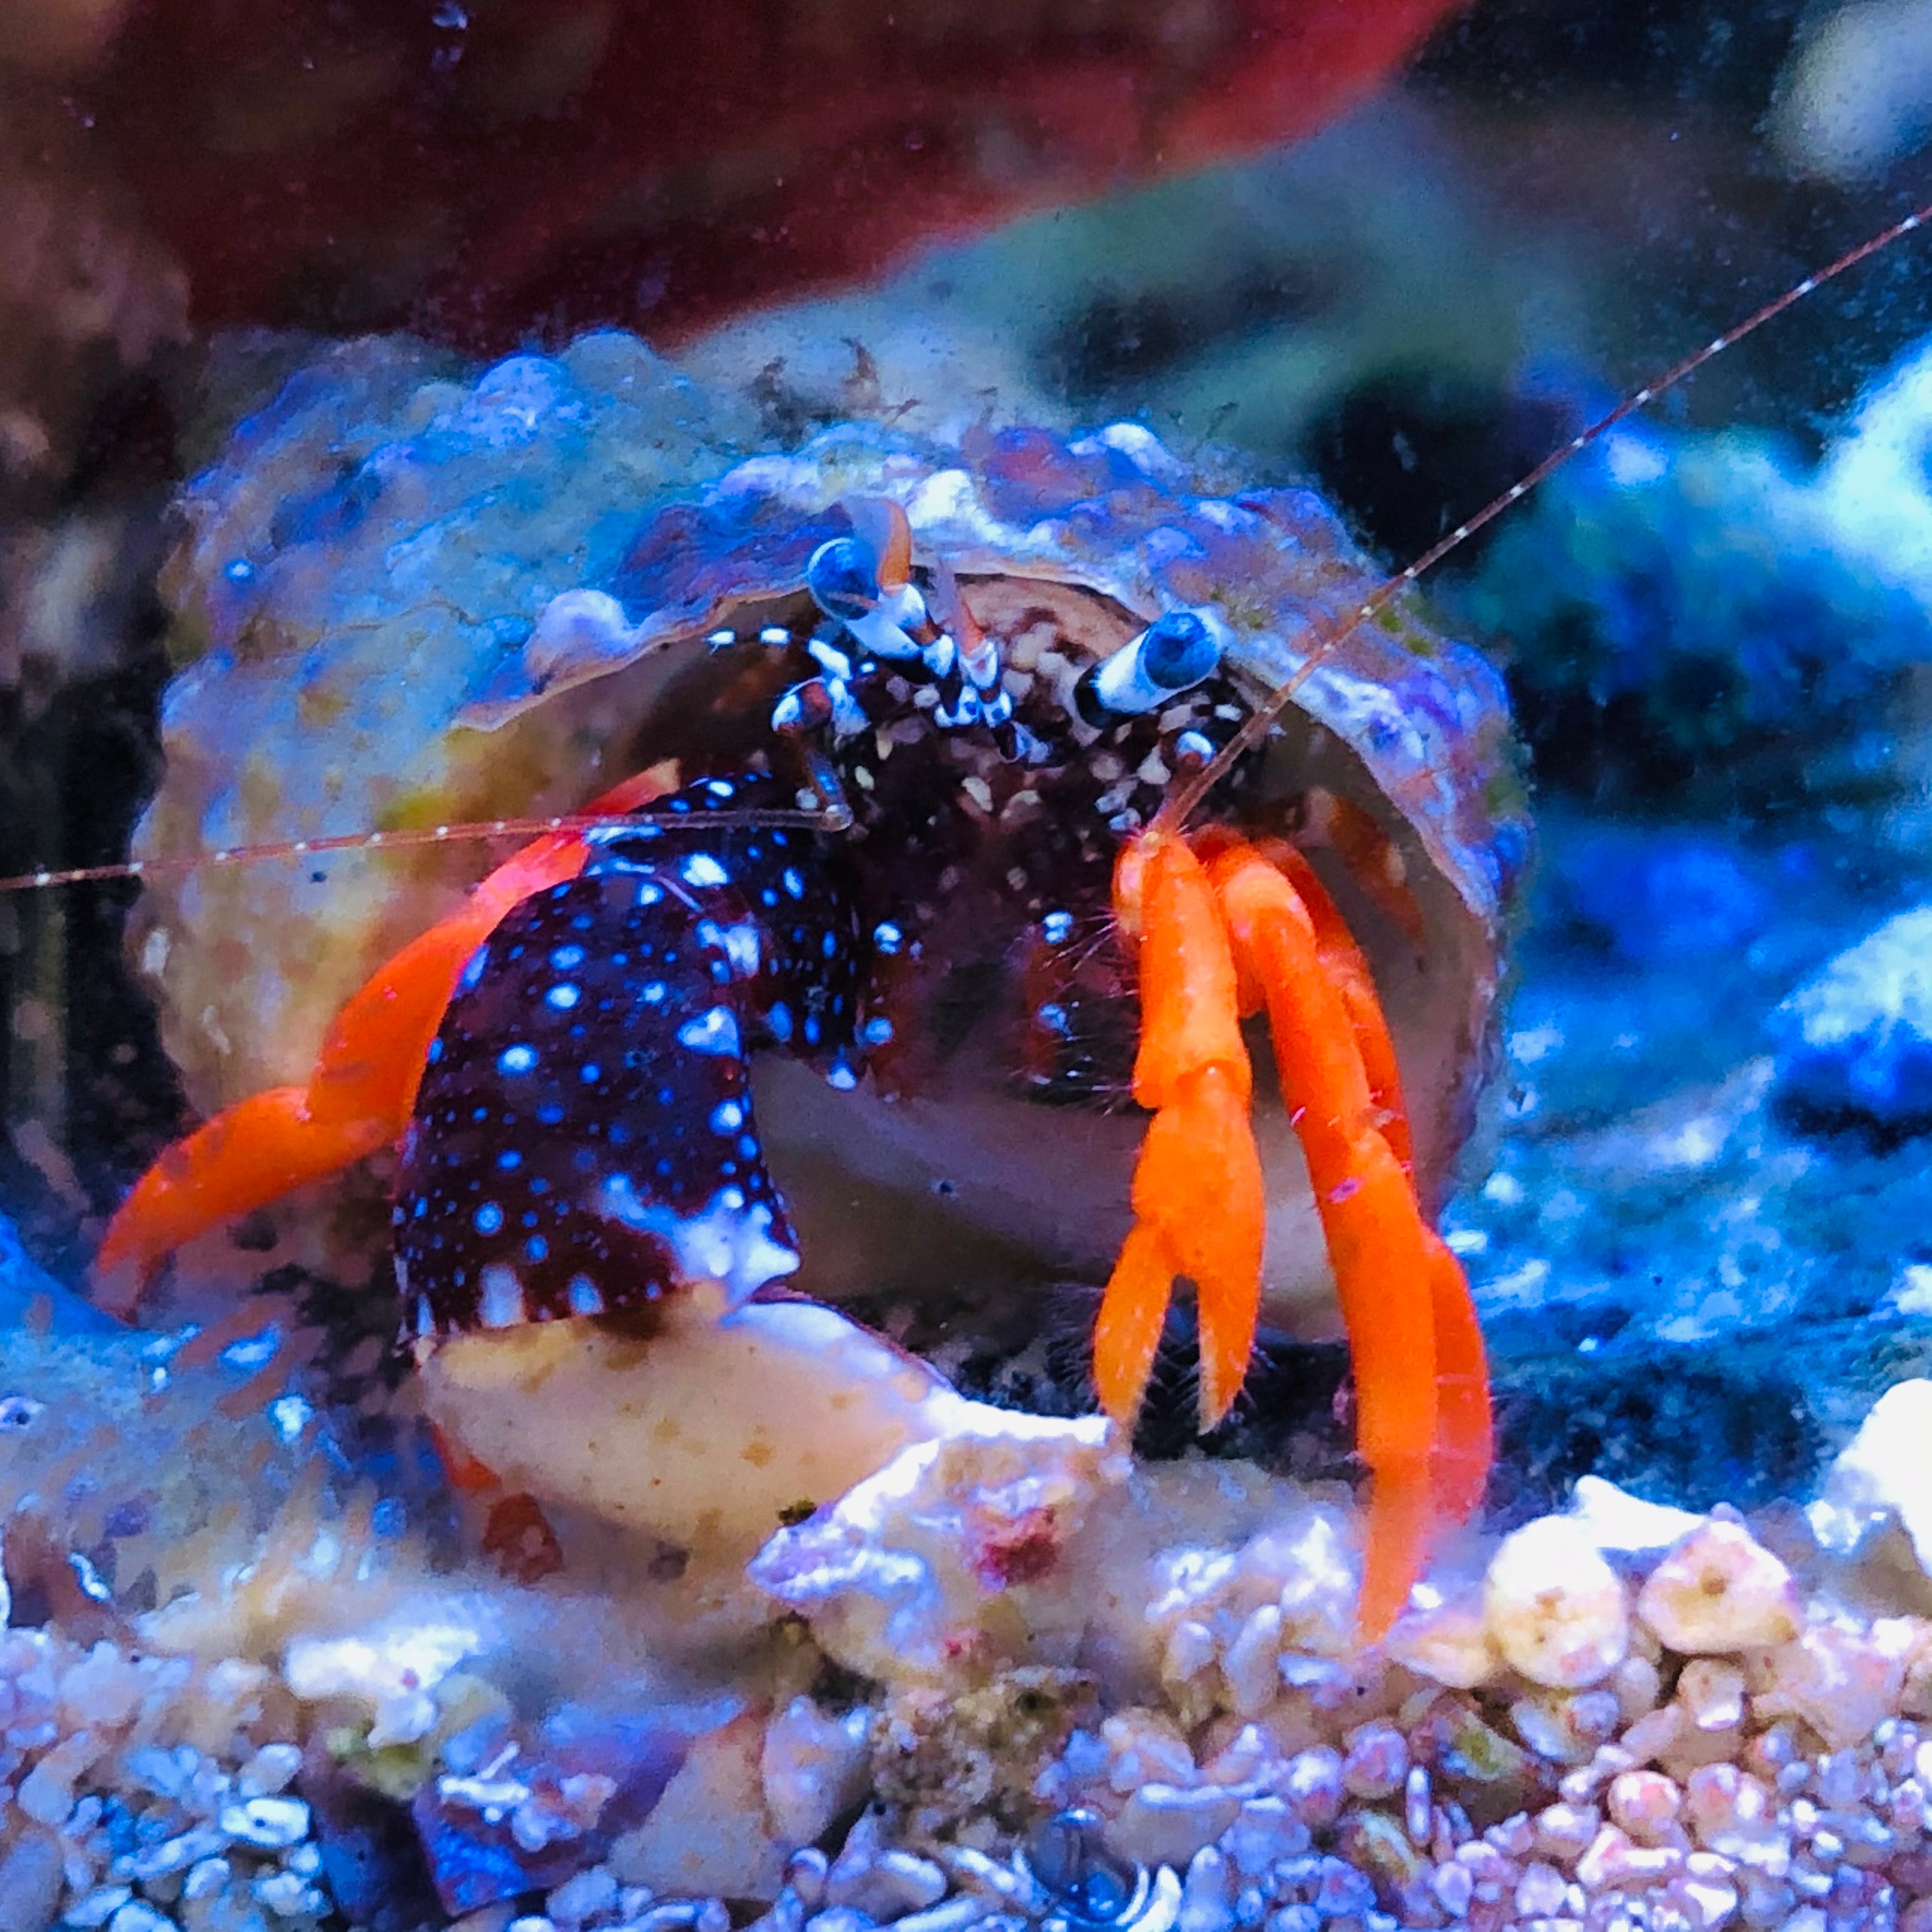 Polka Dot Hermit Crab